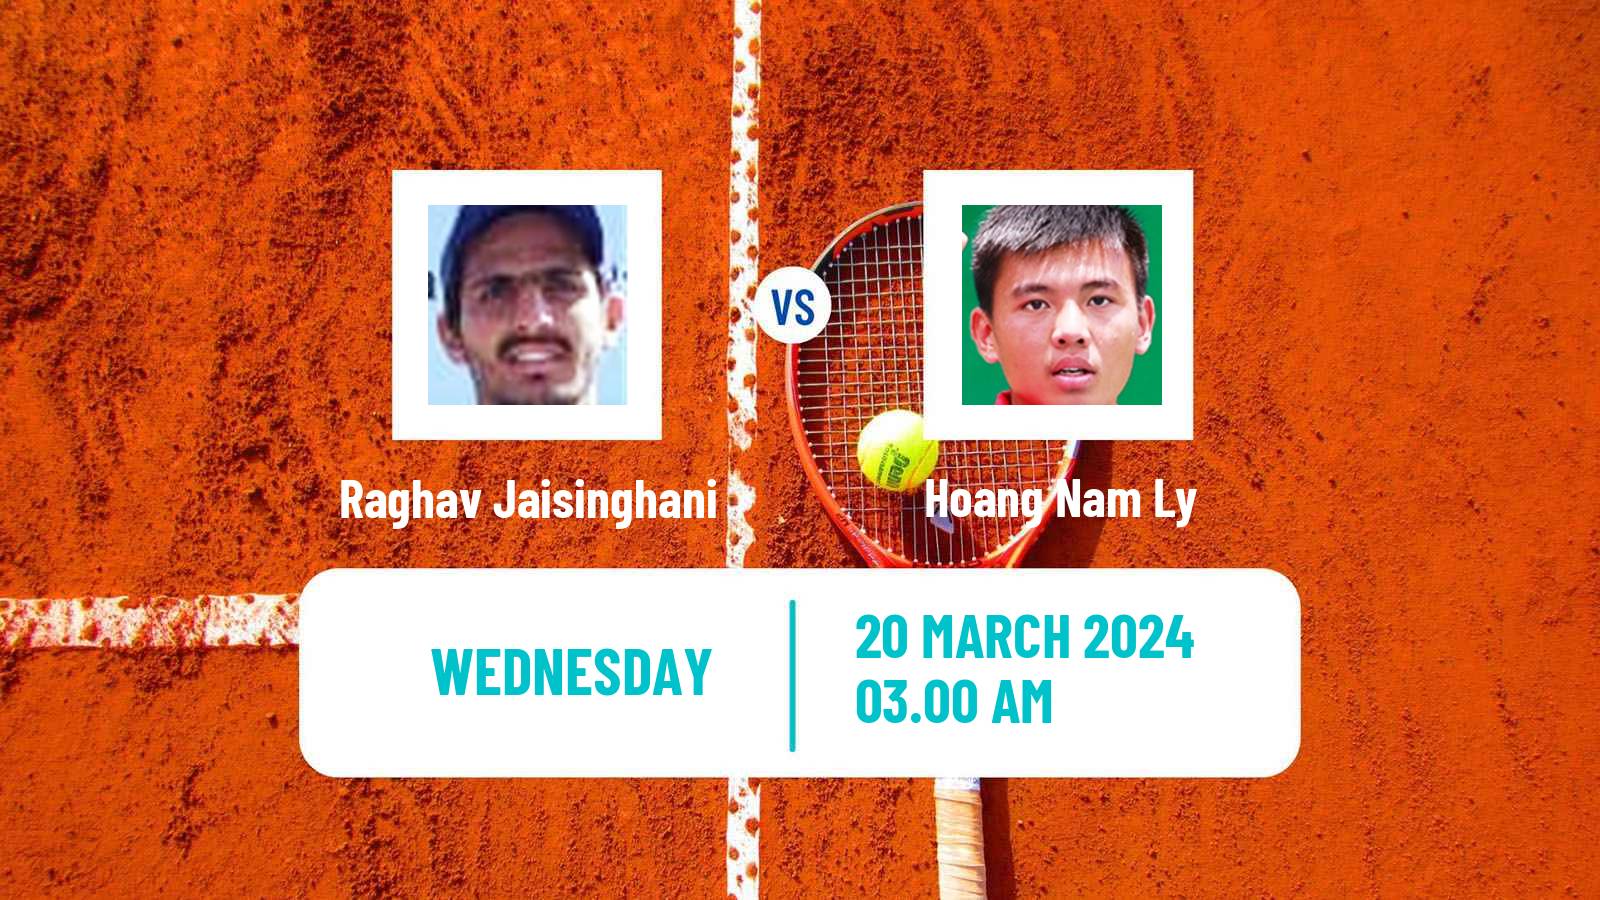 Tennis ITF M15 Chandigarh Men Raghav Jaisinghani - Hoang Nam Ly